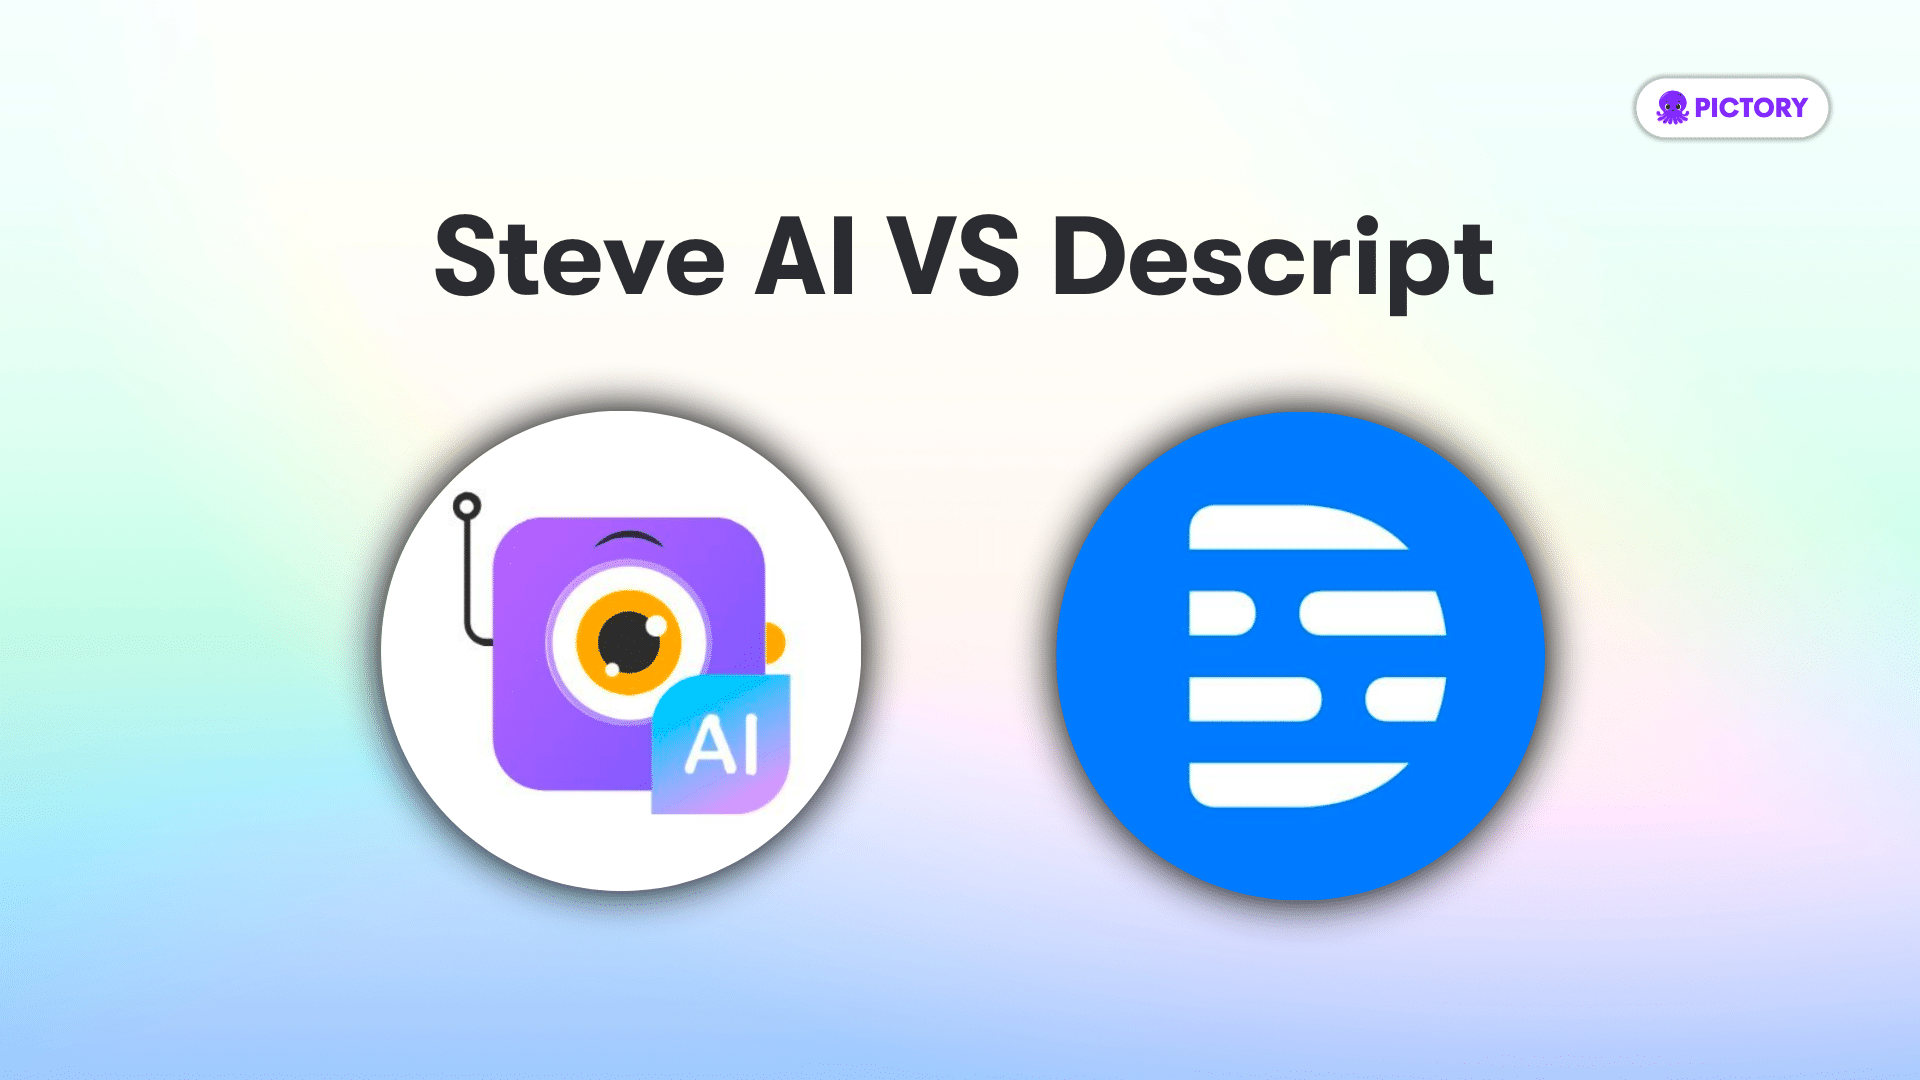 Steve AI vs Descript